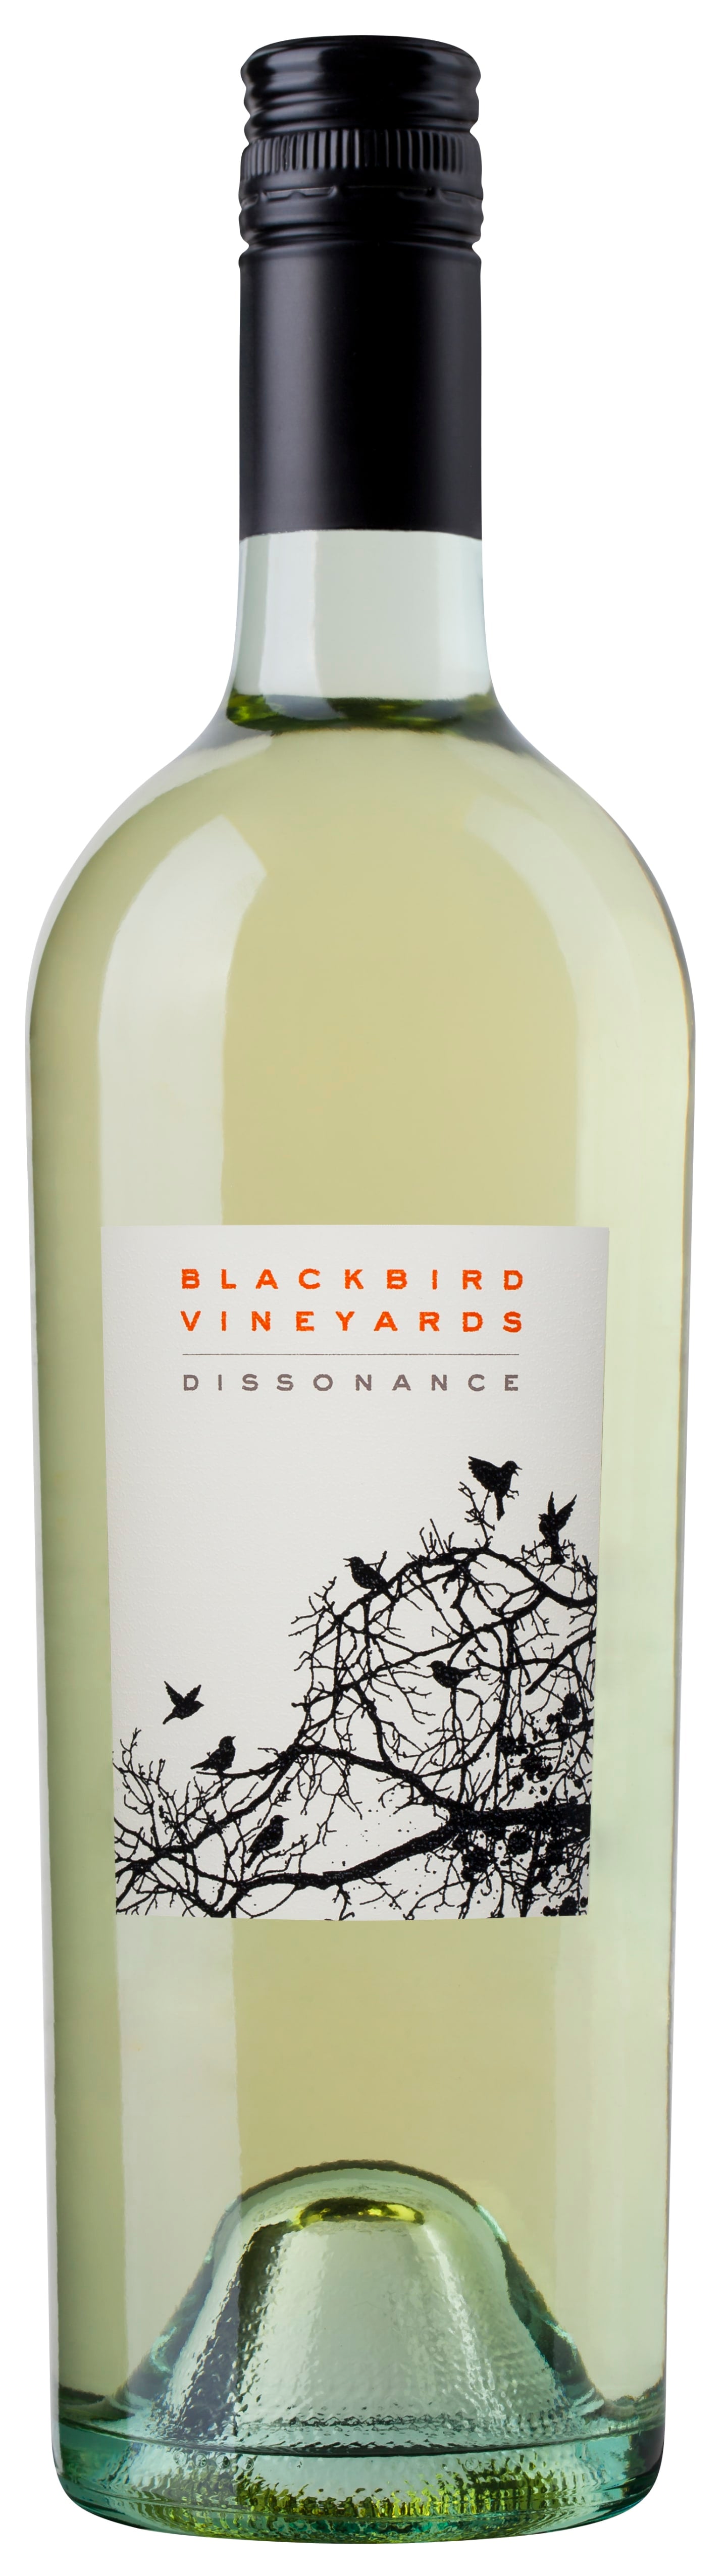 Blackbird Vineyards Dissonance 2018